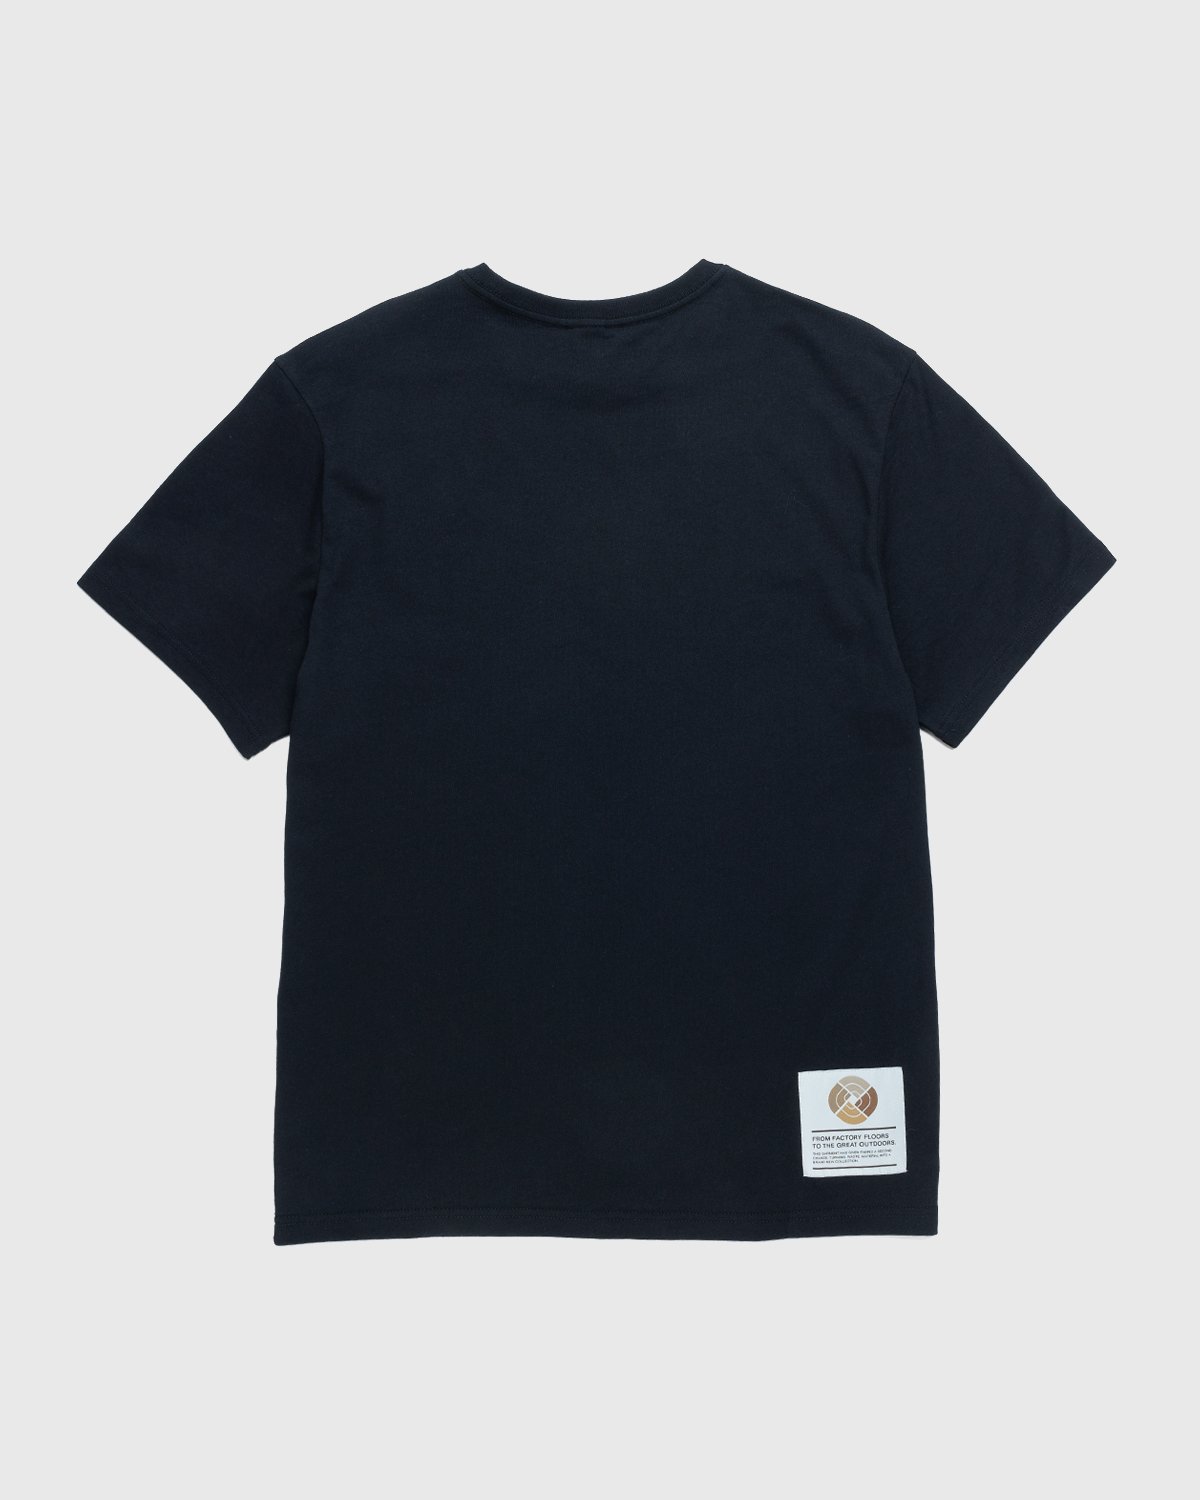 The North Face - Scrap T-Shirt Black - Clothing - Black - Image 2